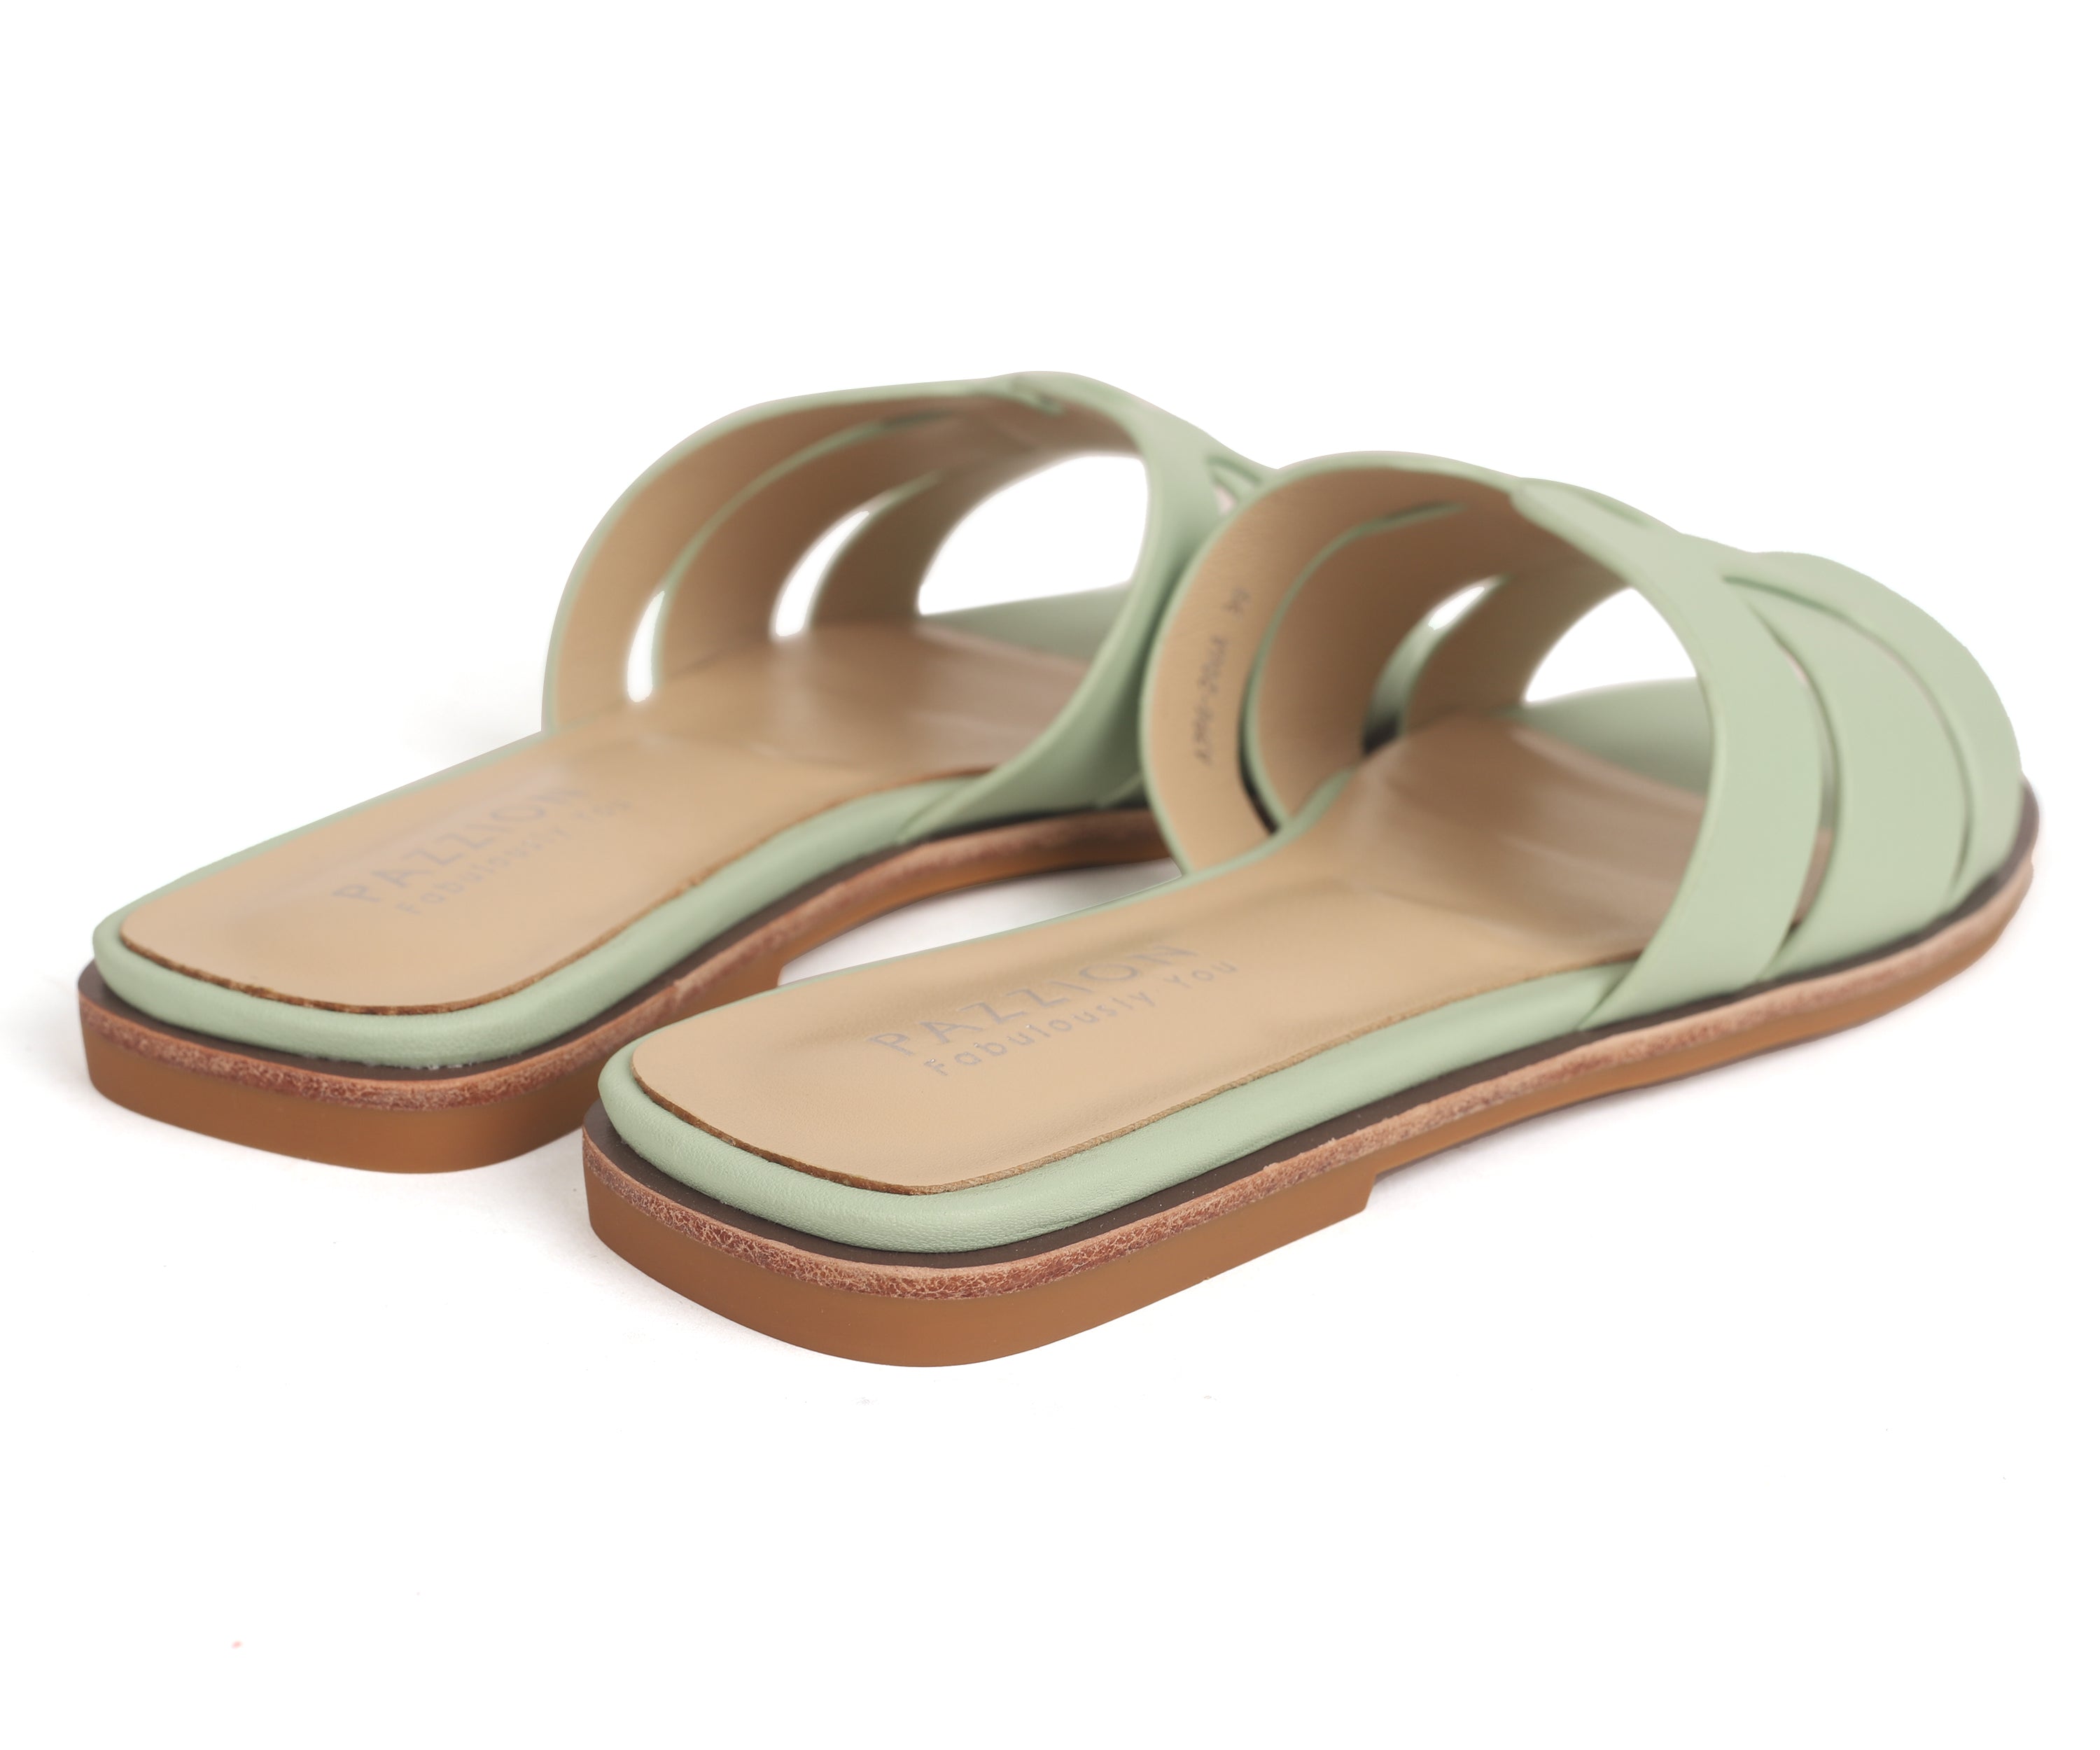 Flats Weave like slide sandals